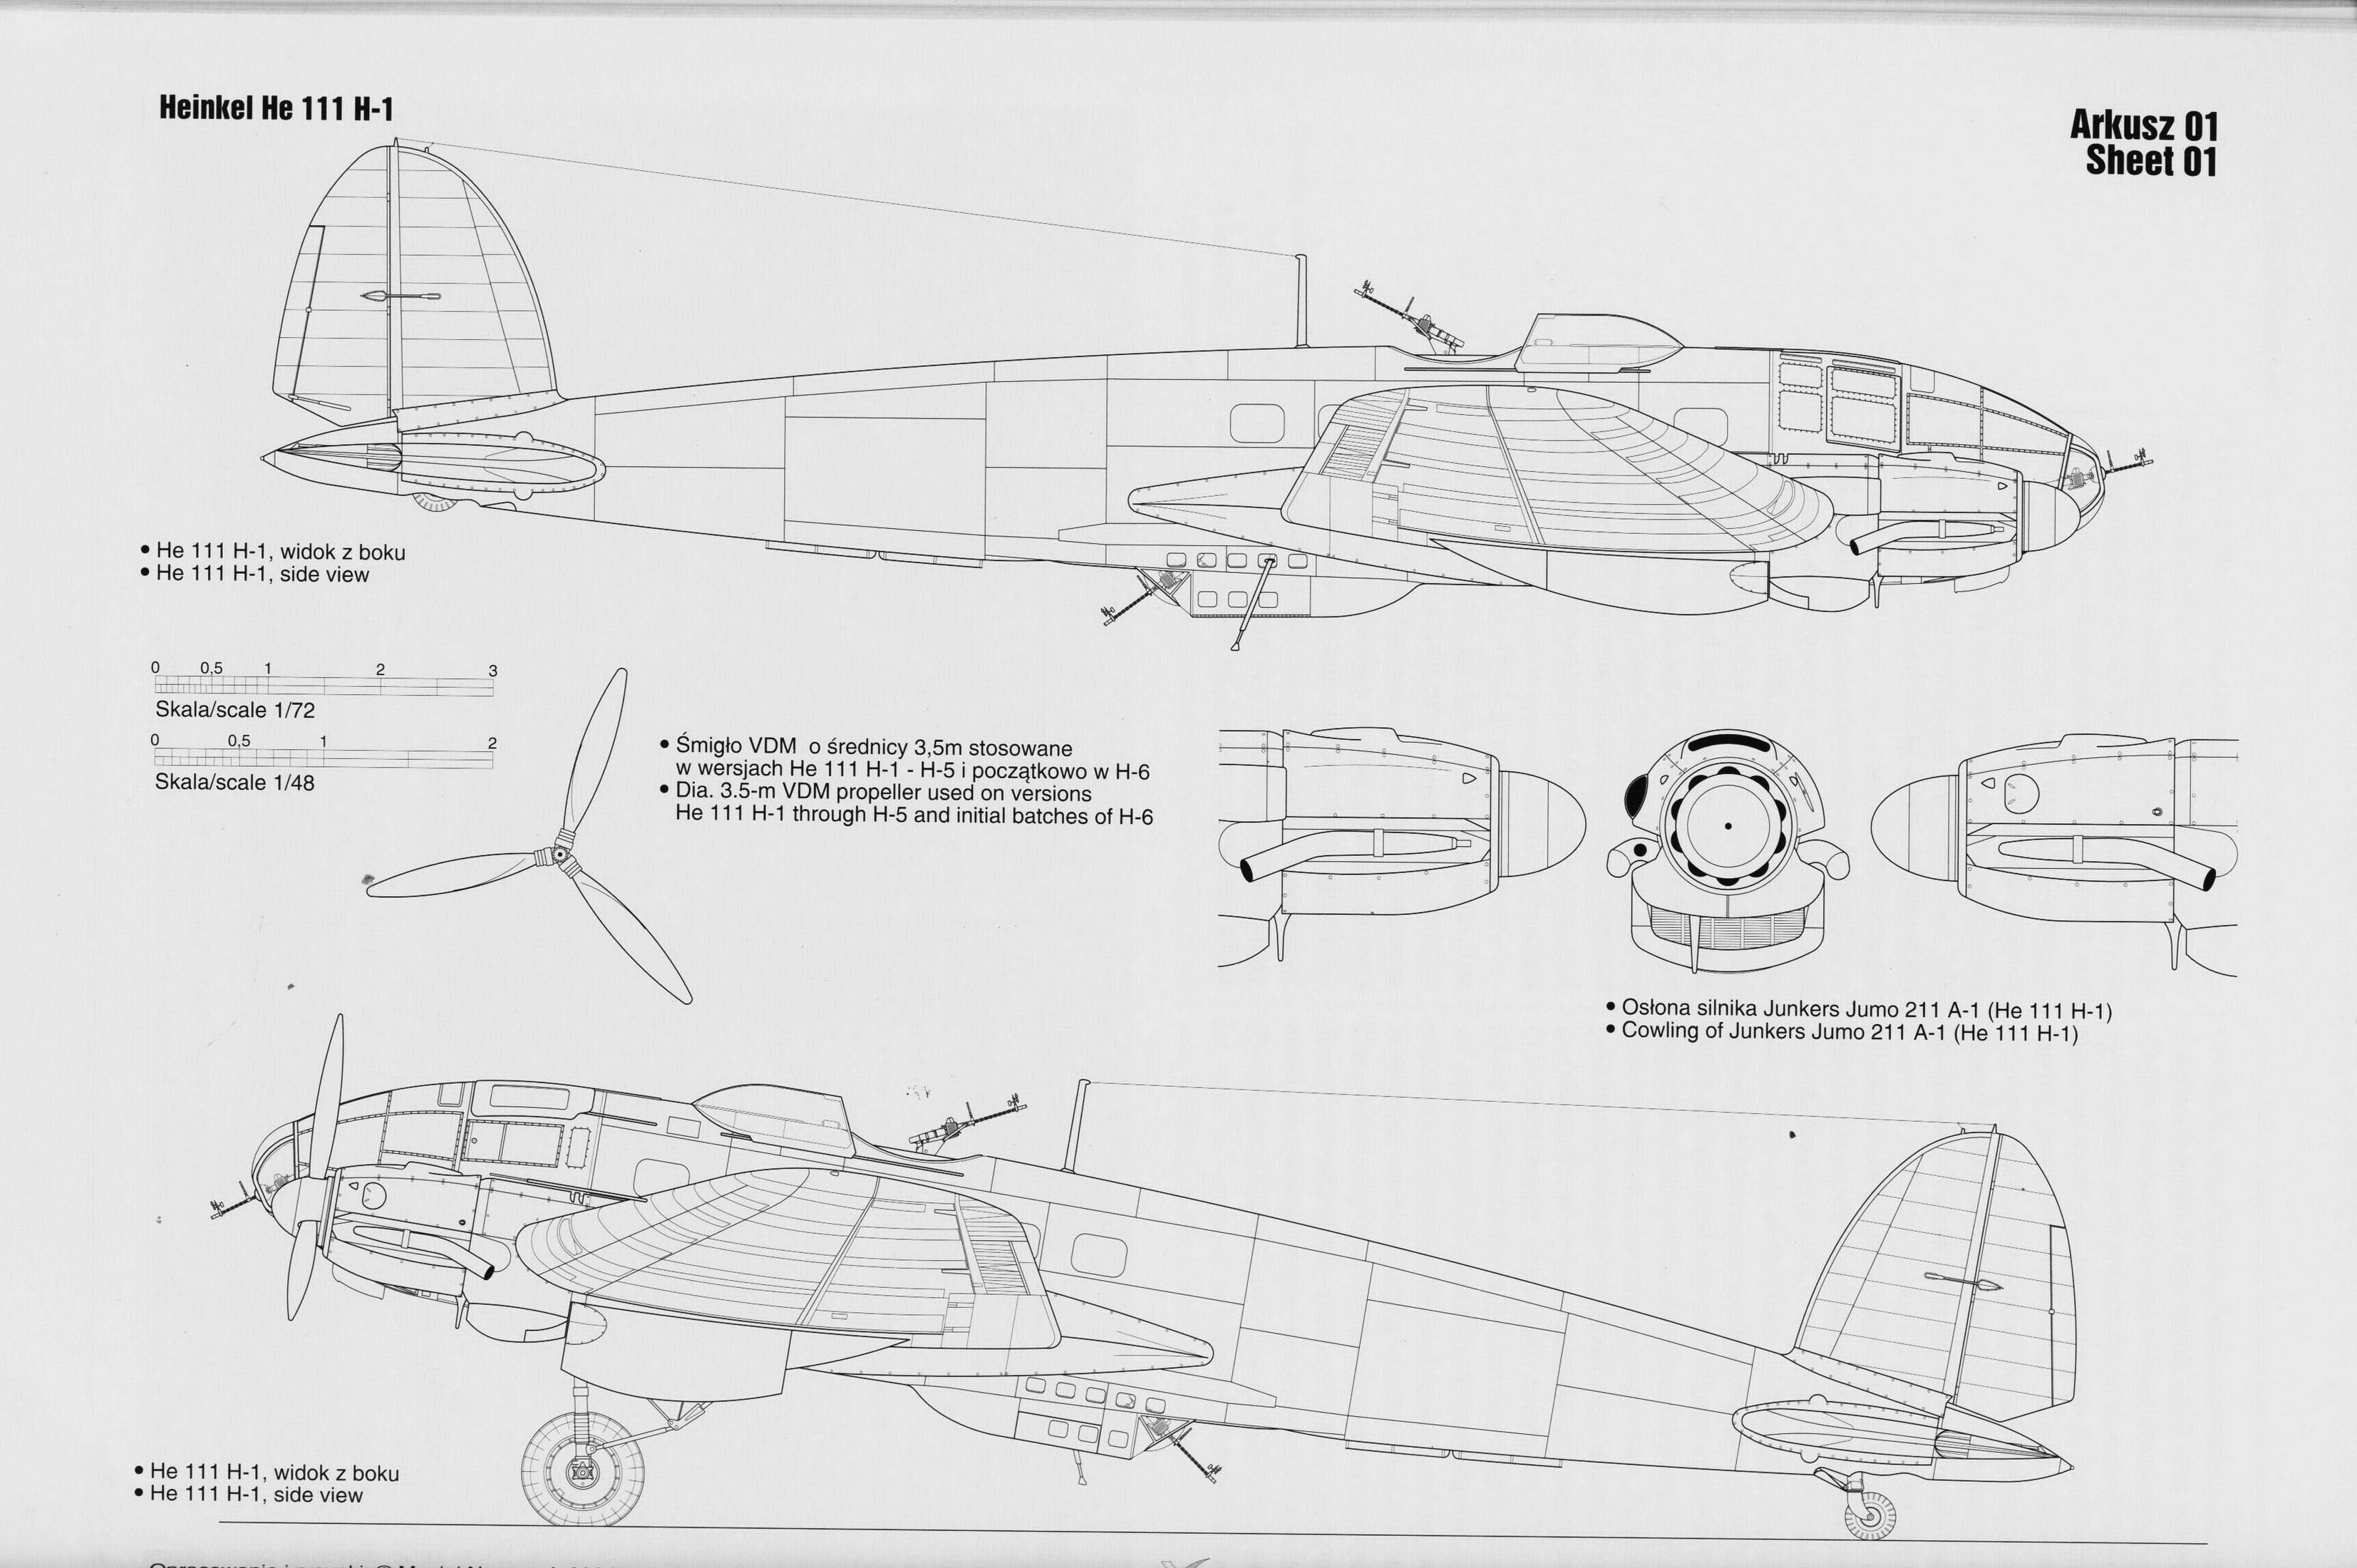 Artwork line drawing or blue print of a Heinkel He 111H1 scale 1 72 Arkusz 01